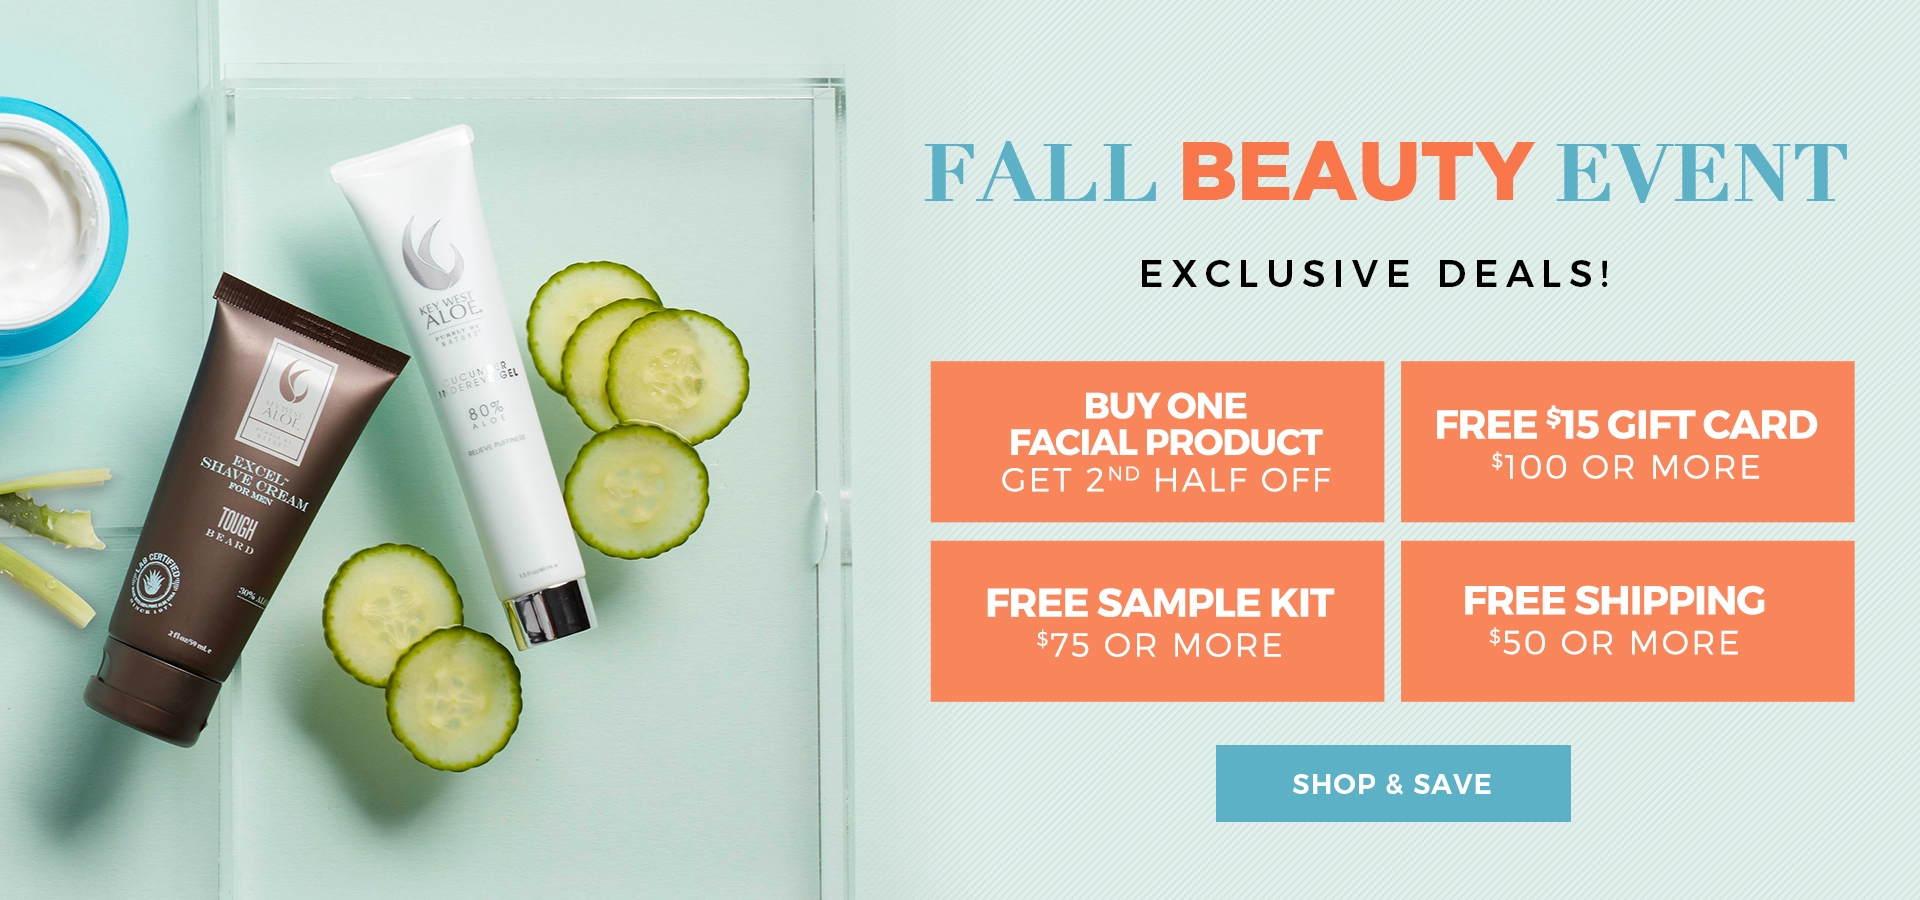 Fall Beauty Event - 50% off Facial